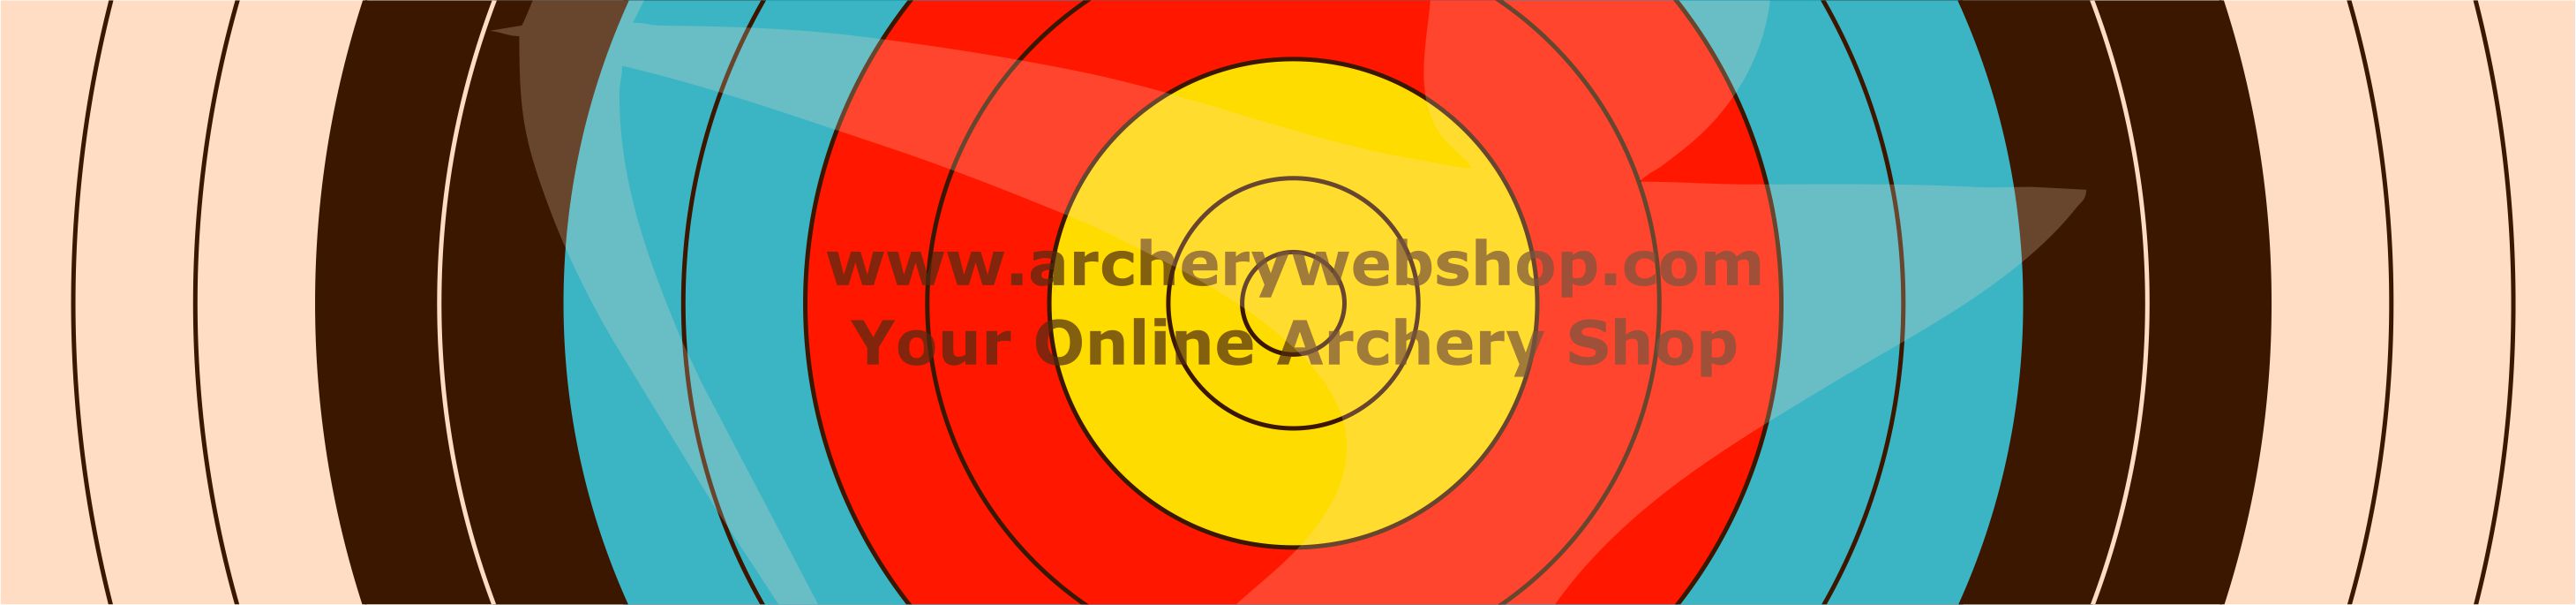 Larp & Archery Games